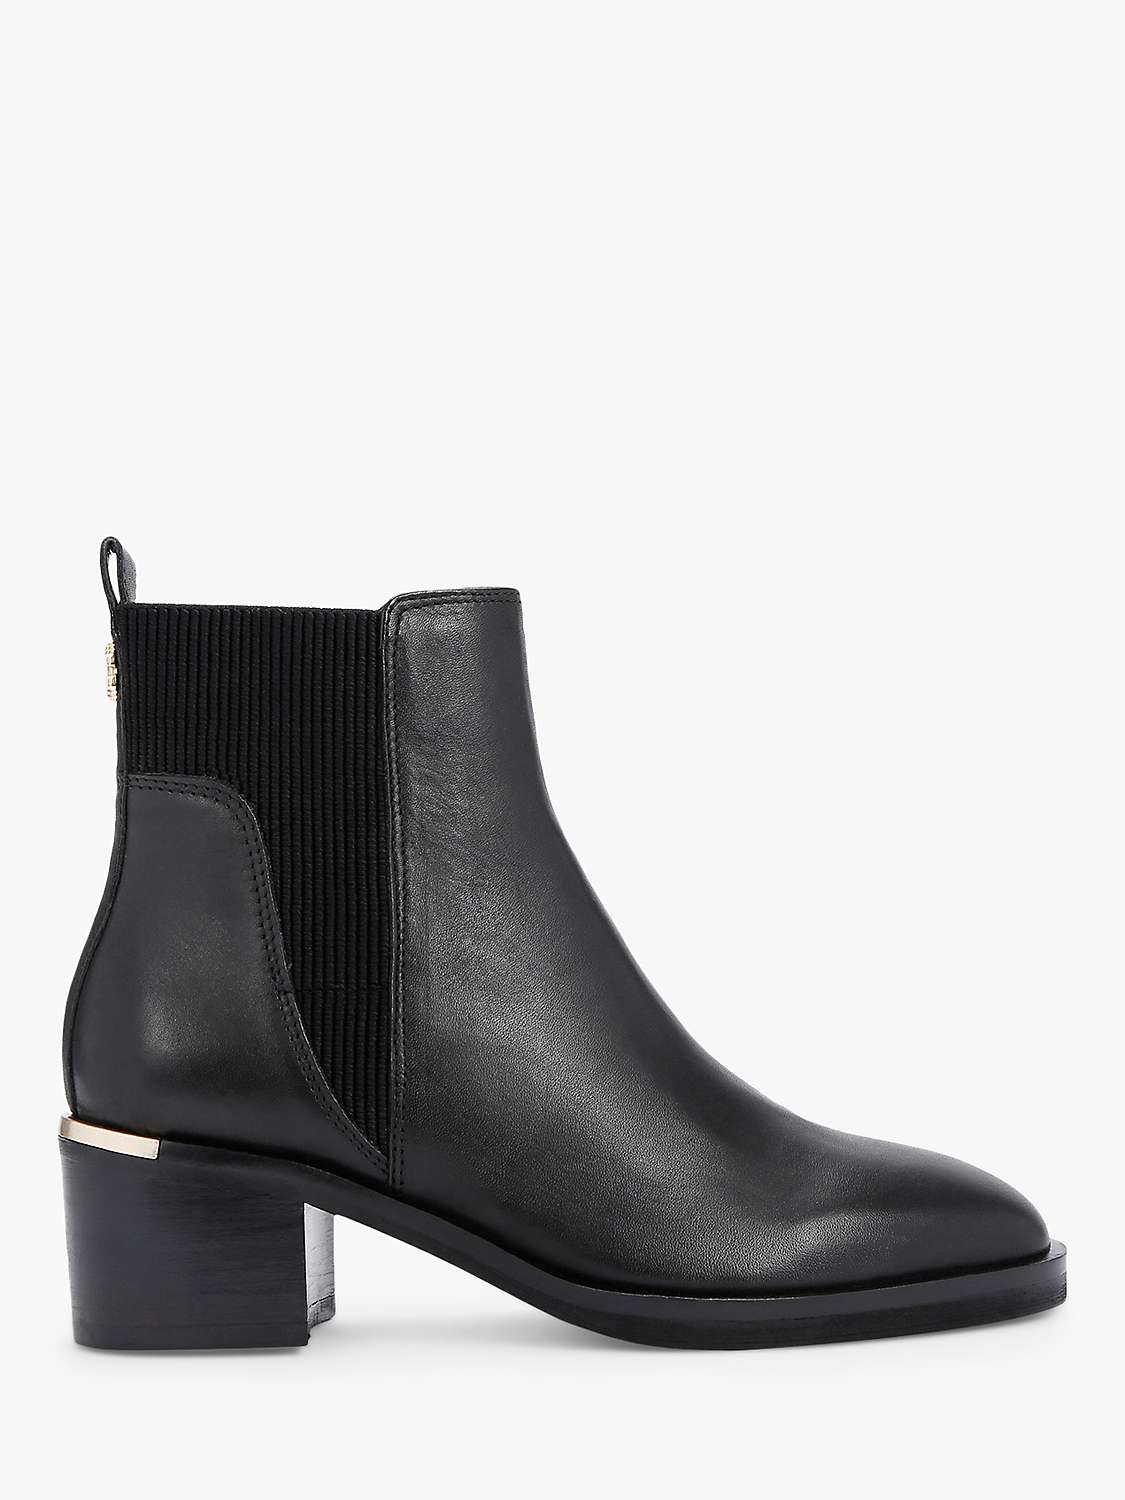 Carvela Liberty Block Heel Leather Ankle Boots, Black